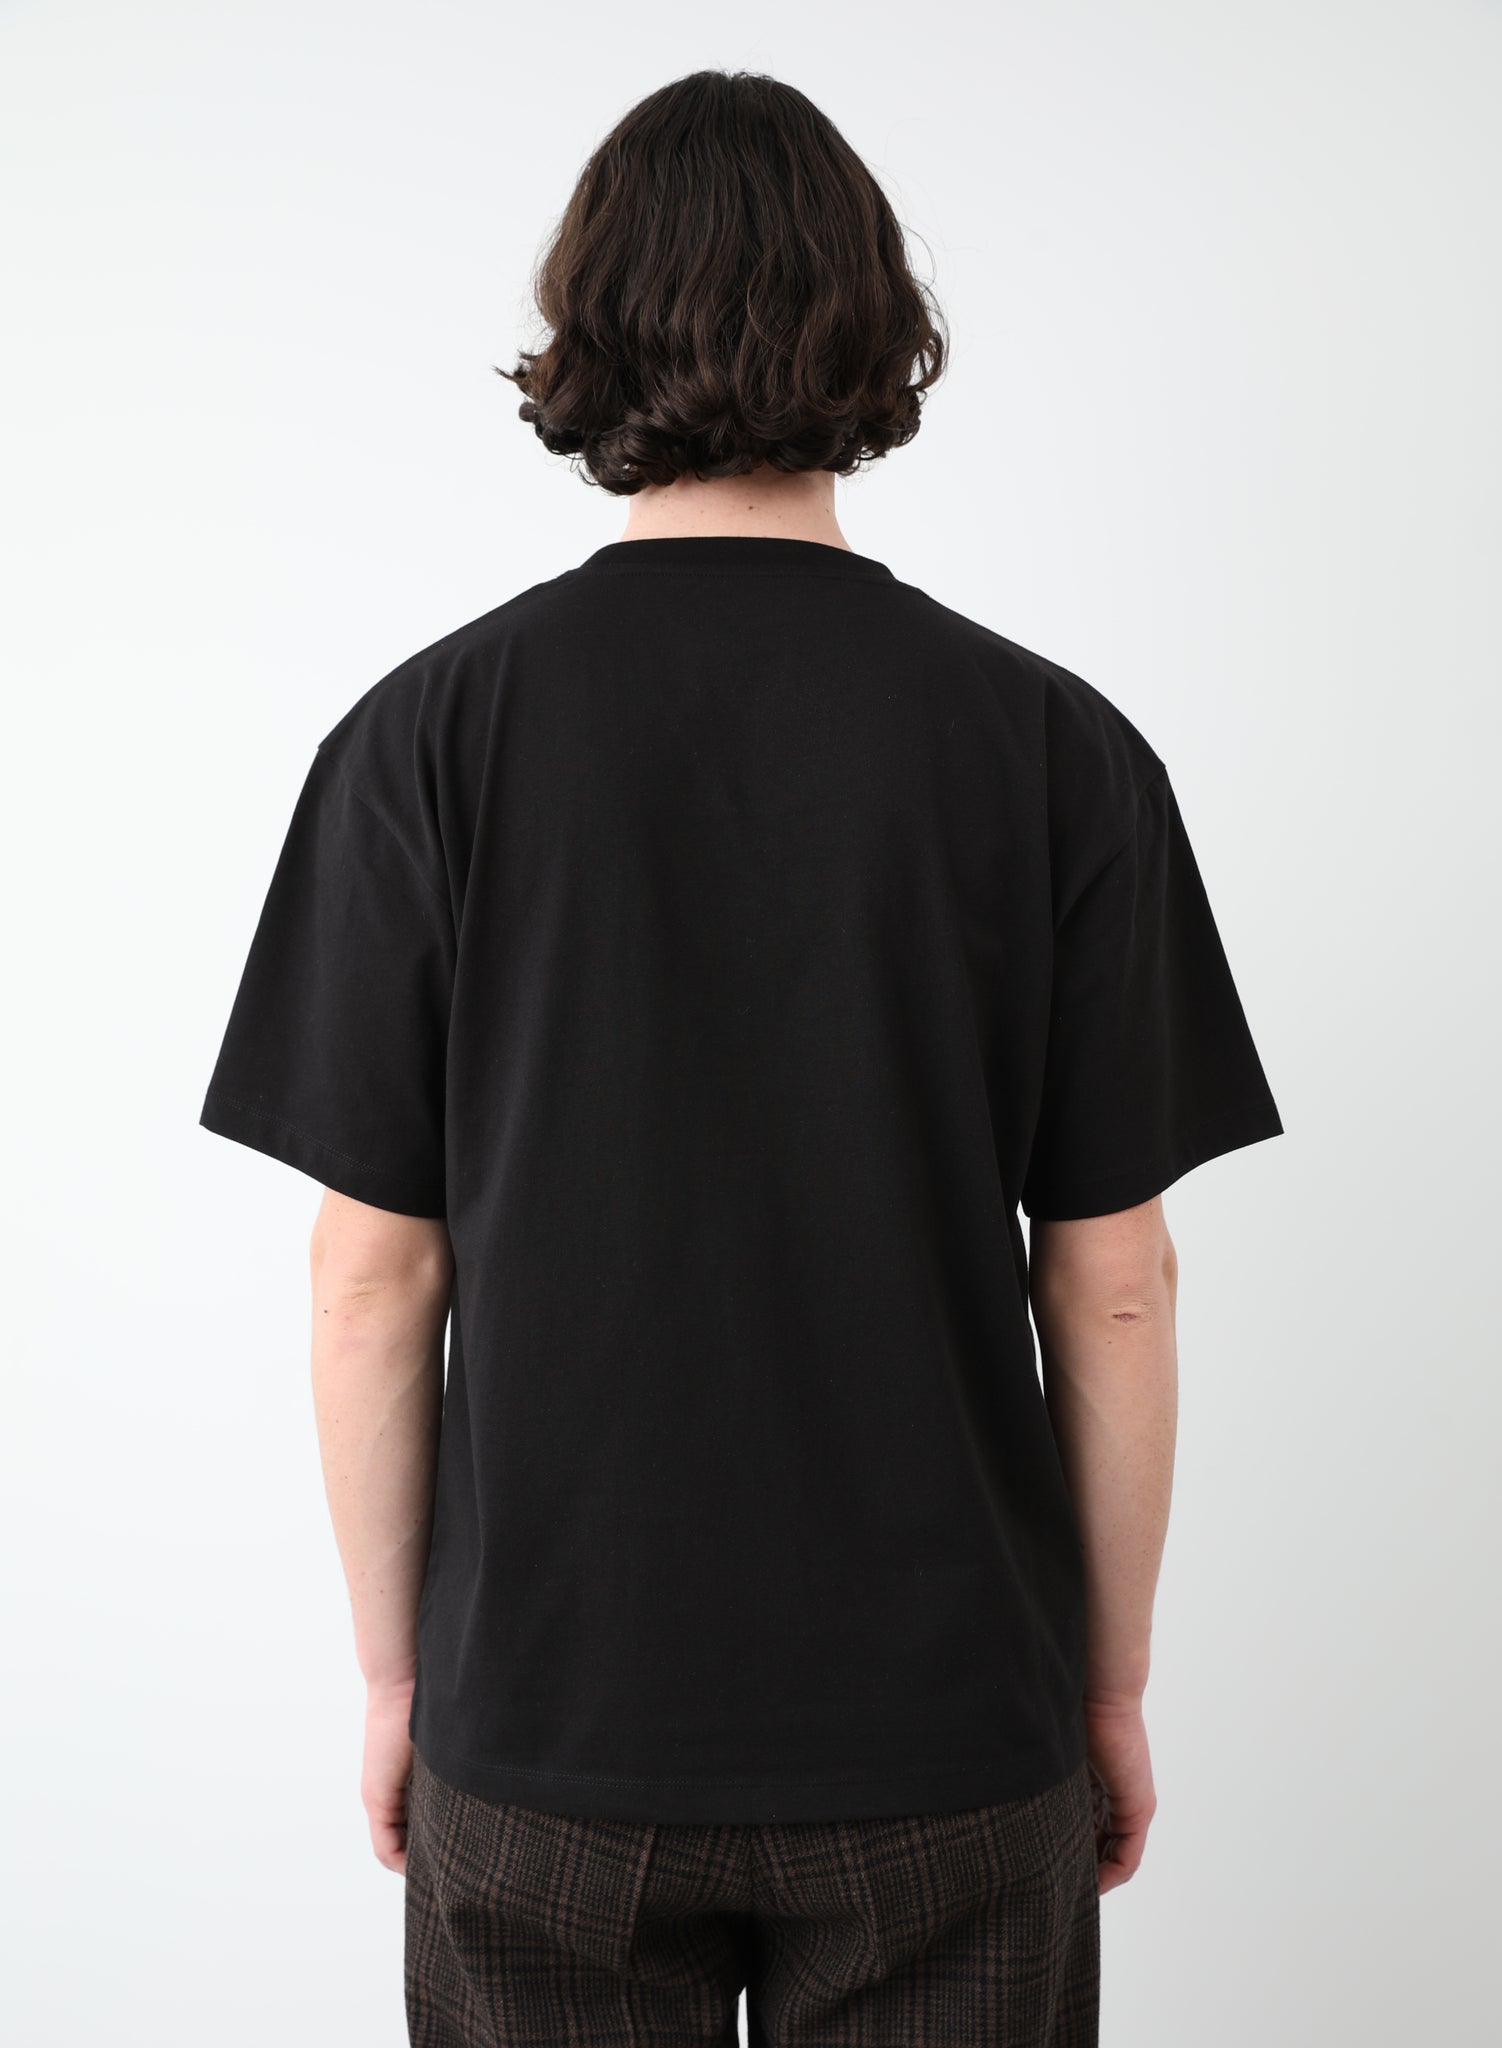 Men Big Logo T-Shirt Knit Black - Rassvet (PACCBET)